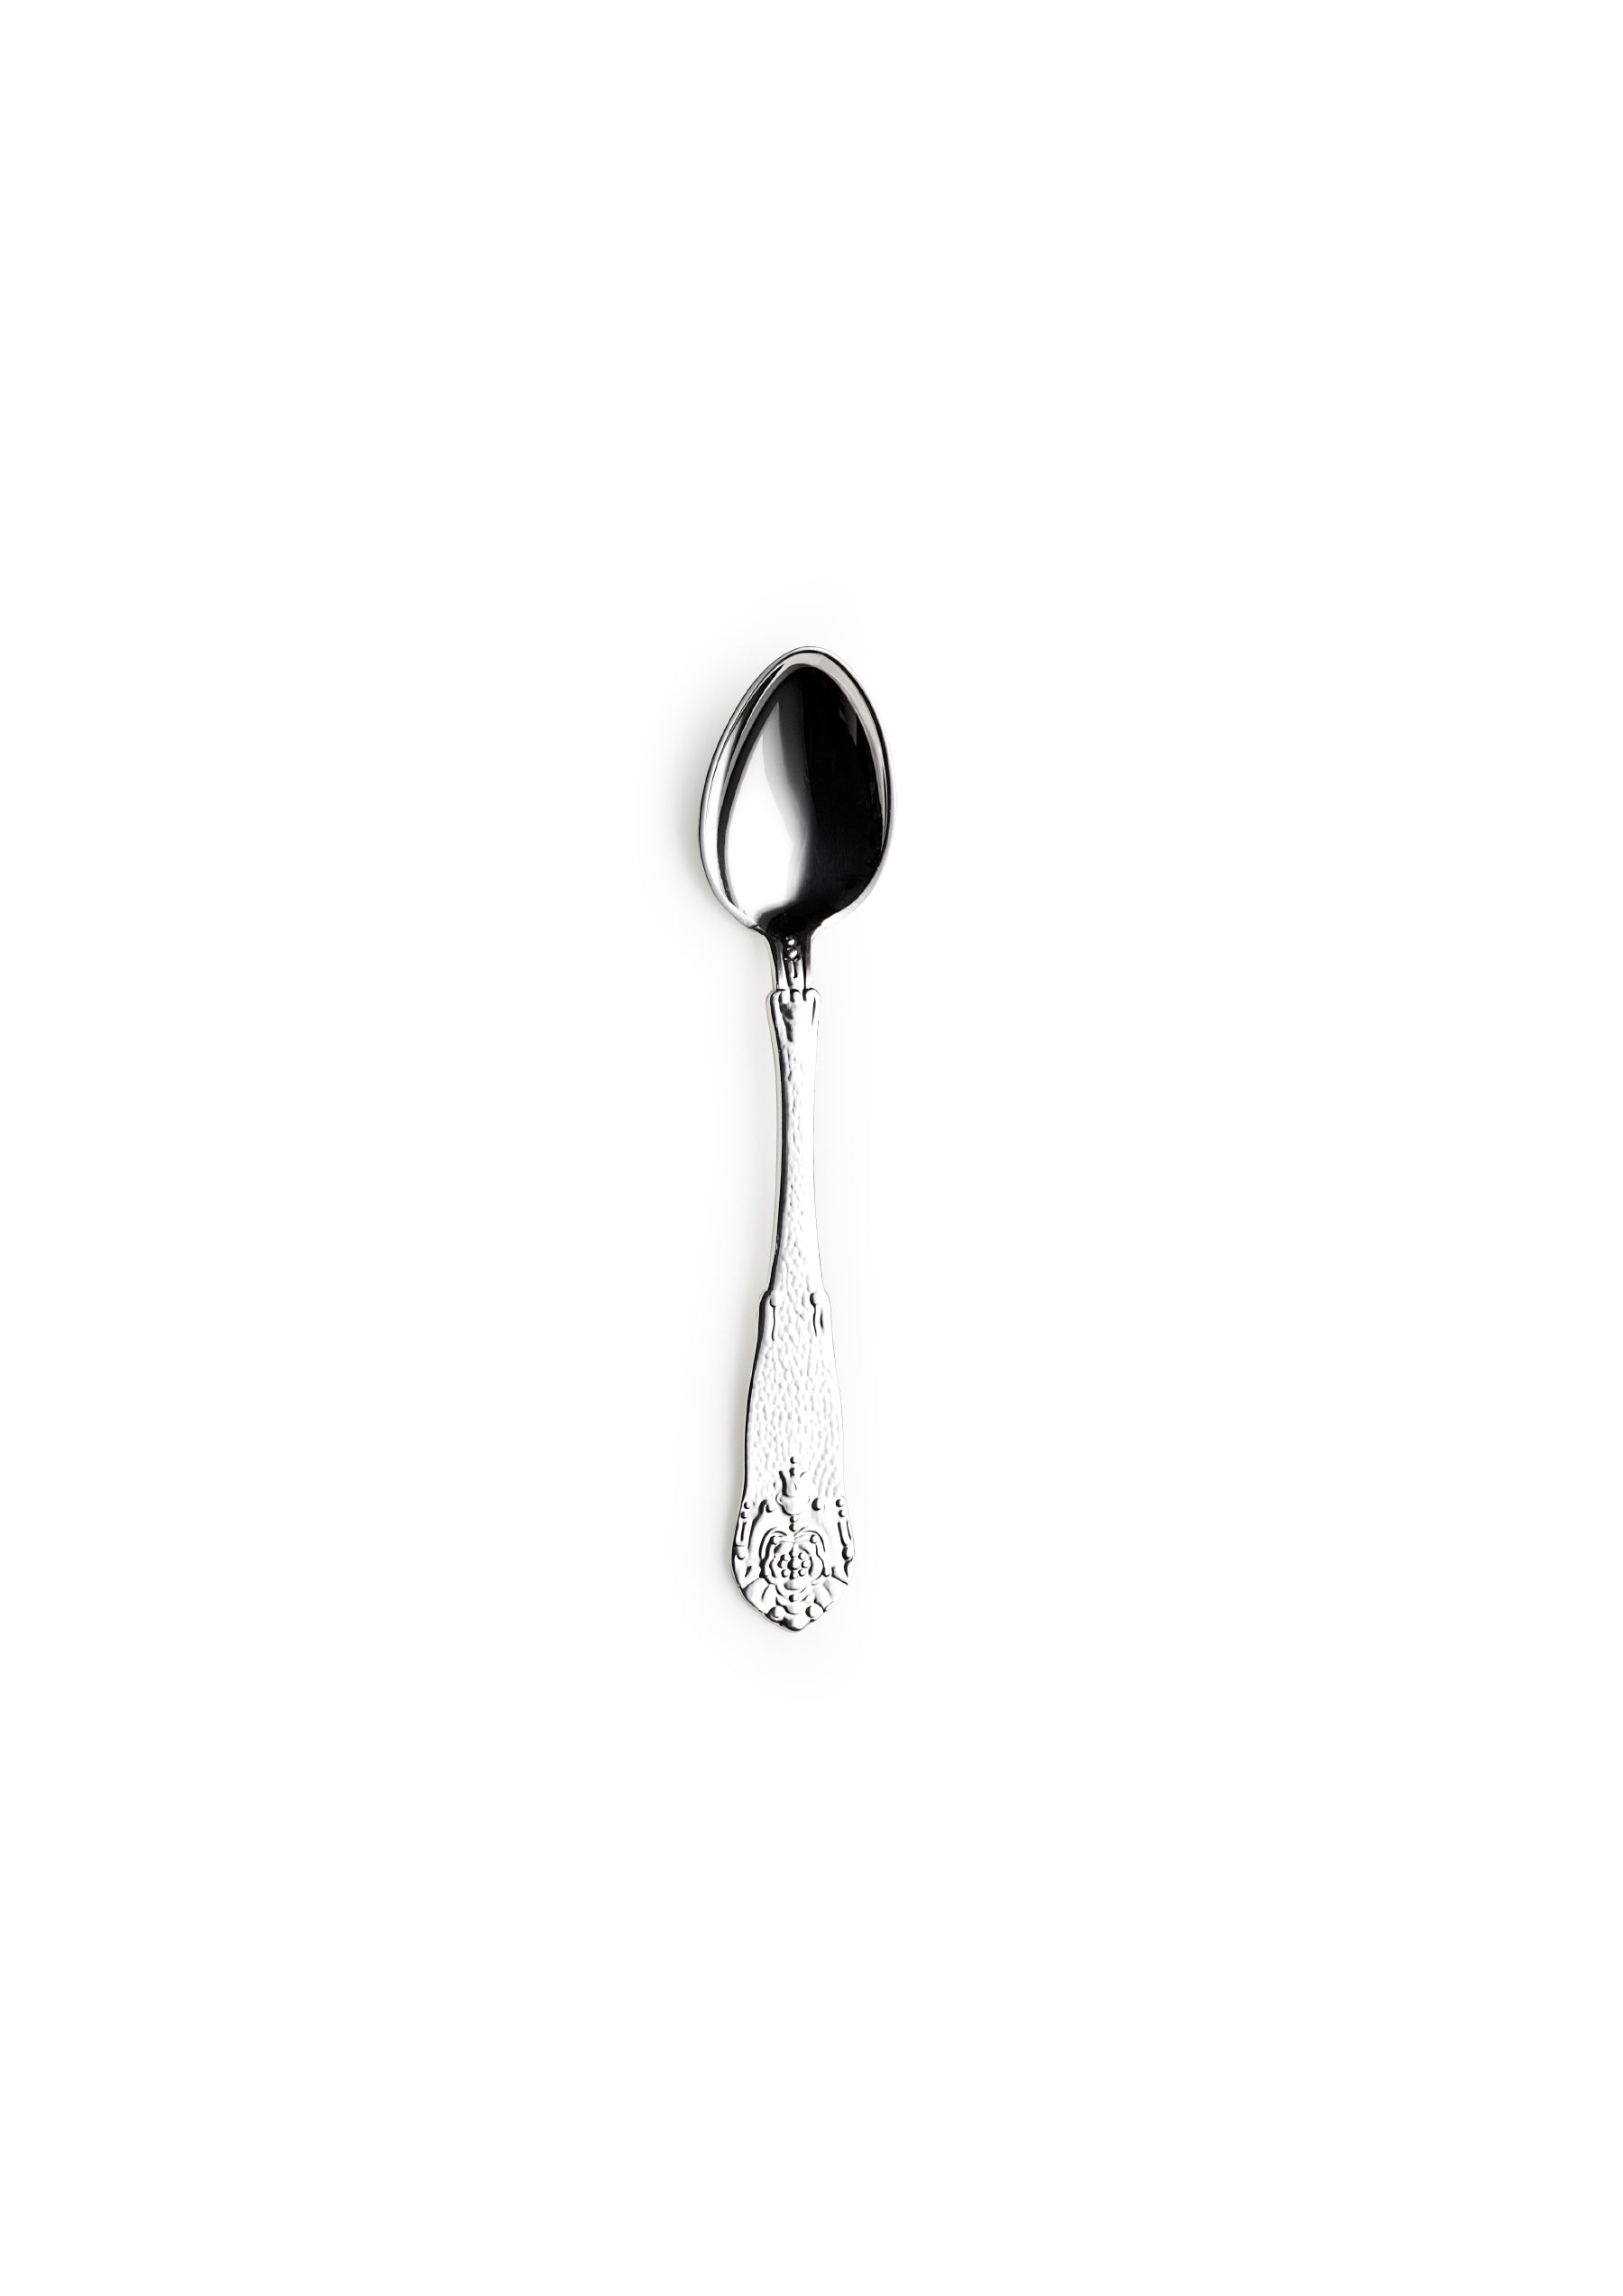 Hardanger teaspoon